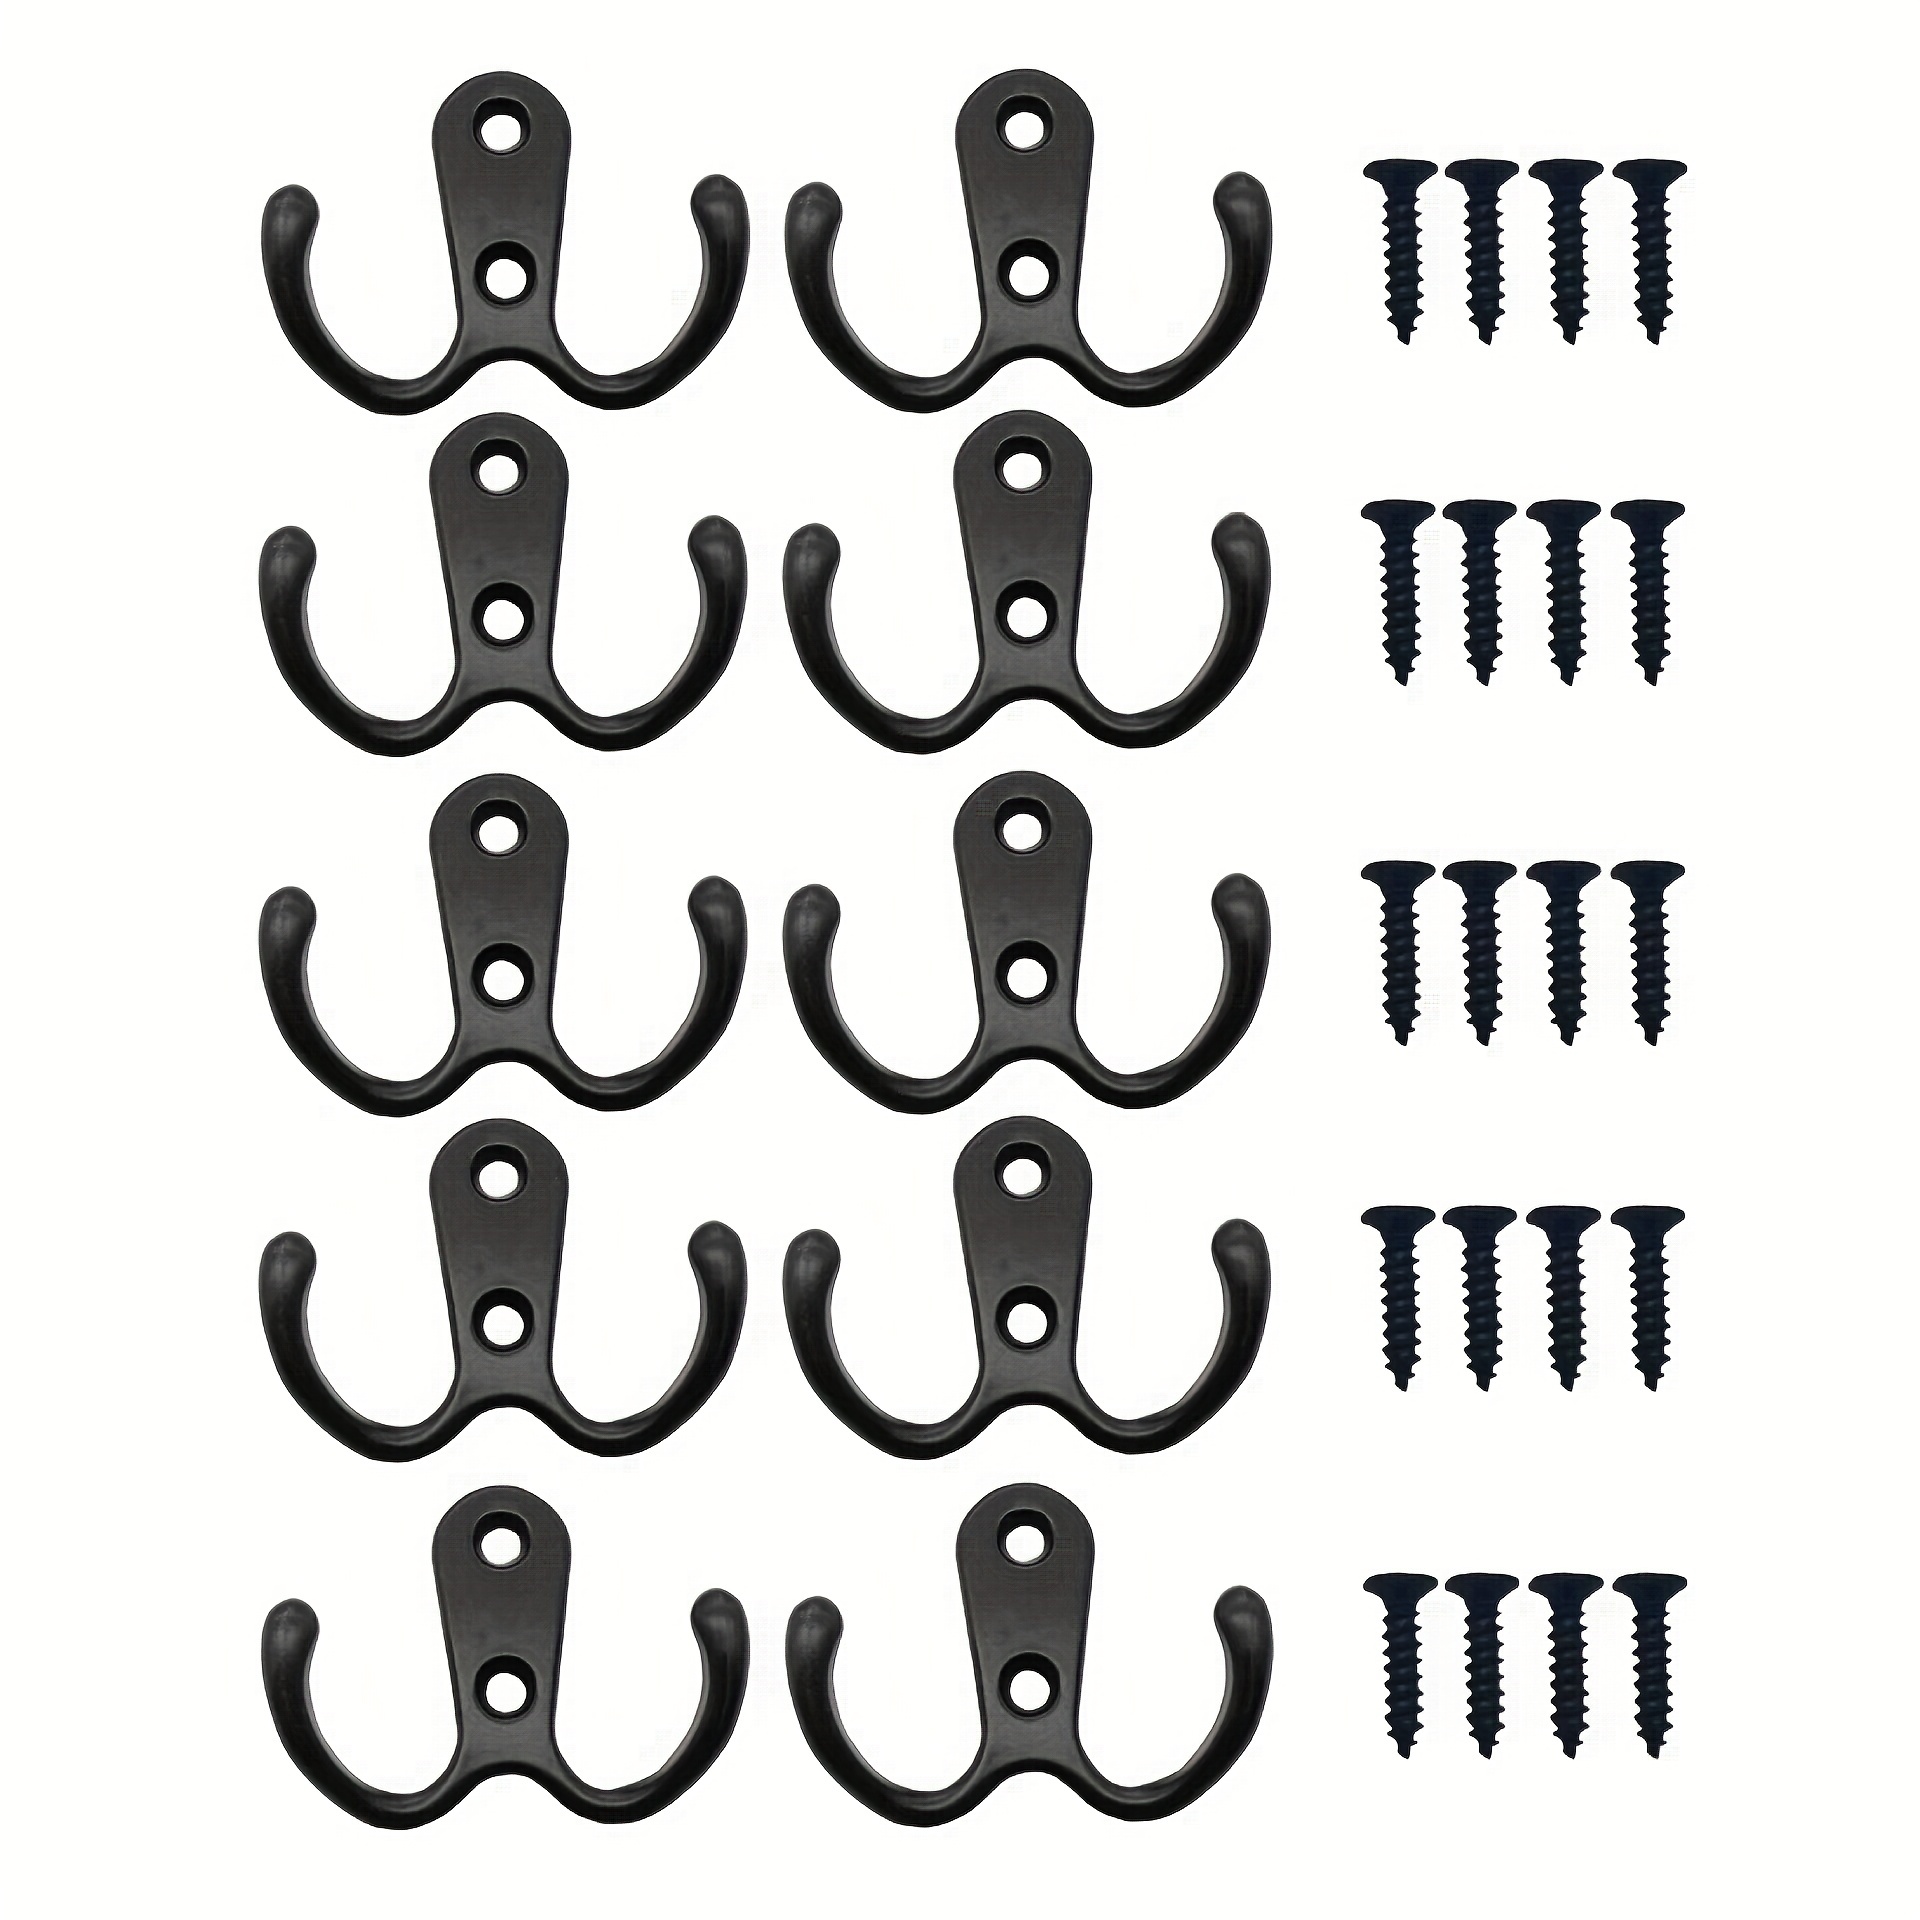  Kruodop 10 Pack Wall Hooks Wall Mounted Coat Hooks For  Hanging Heavy Duty, Black Towel Hooks, Metal Double Coat Hanger